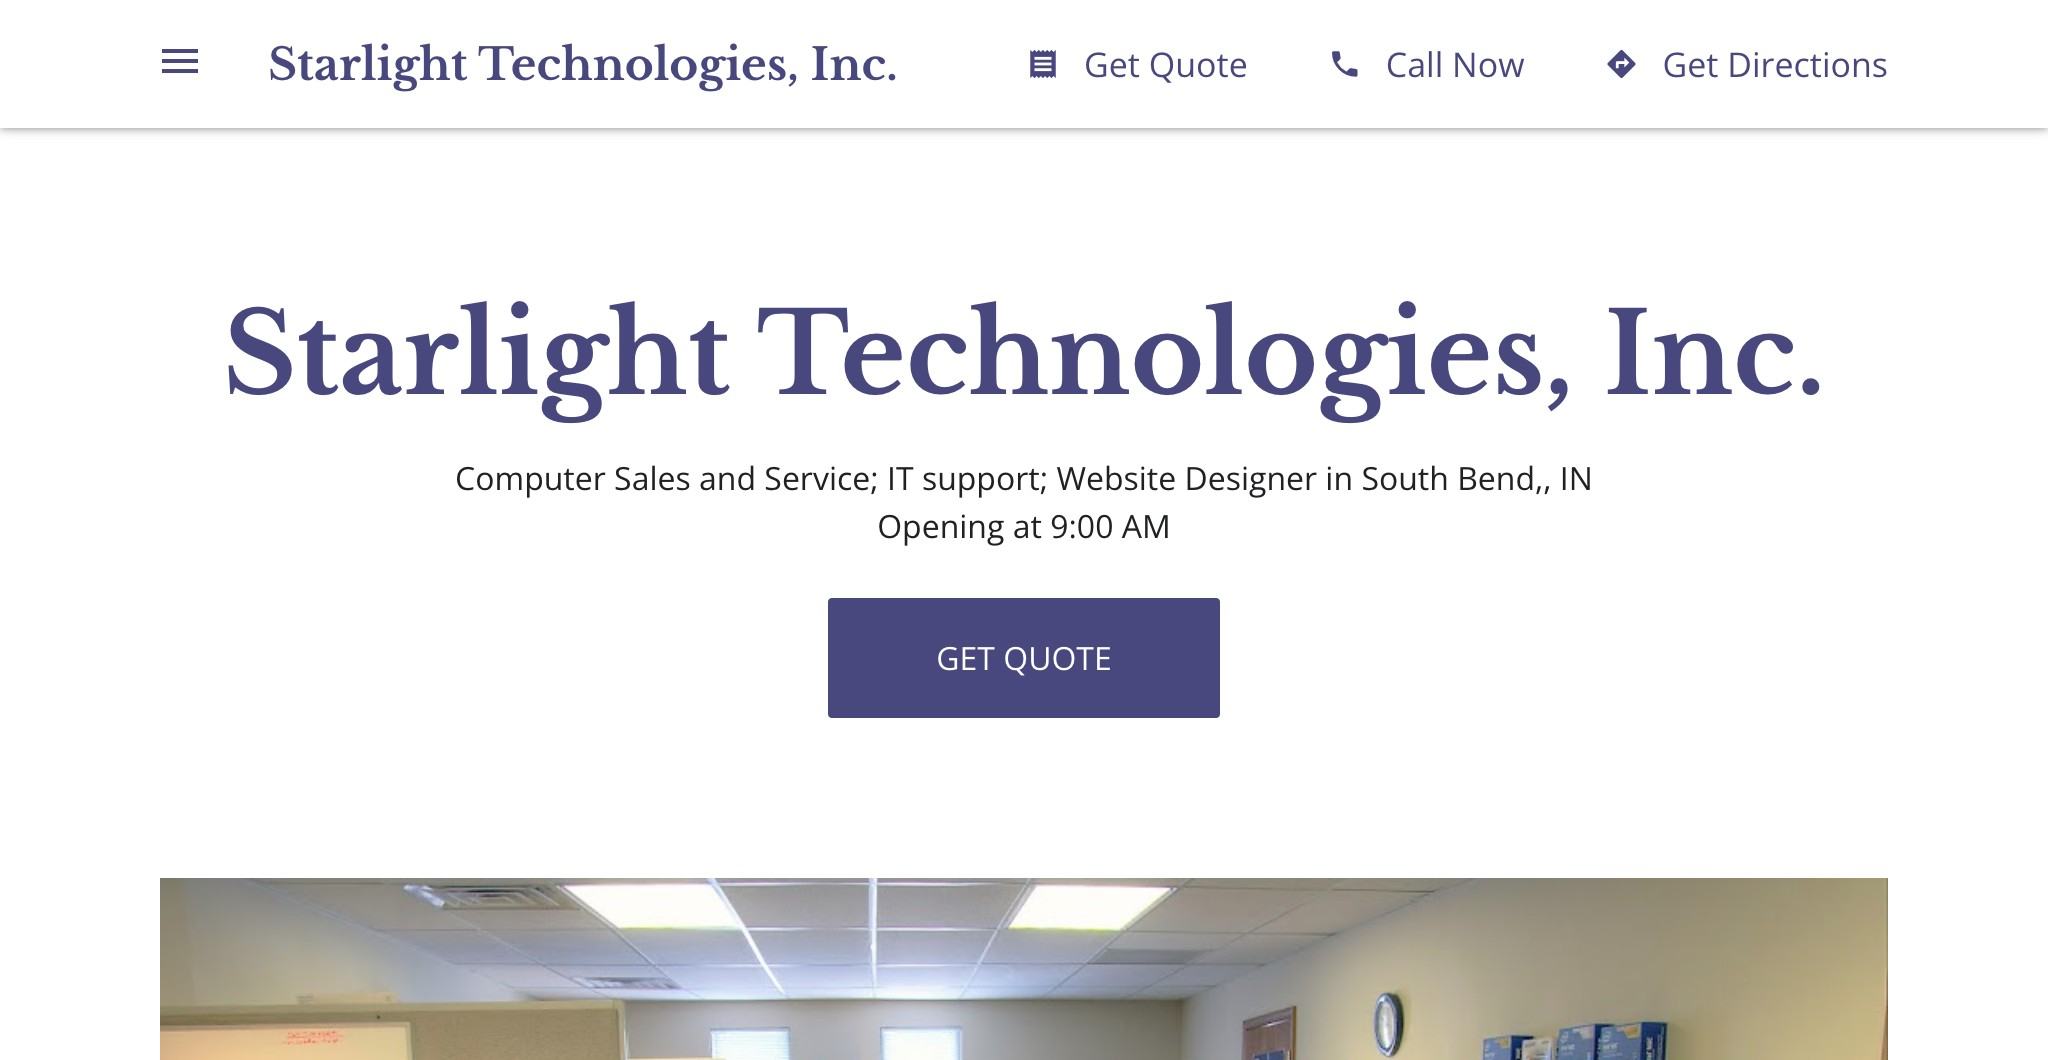 Starlight Technologies, Inc